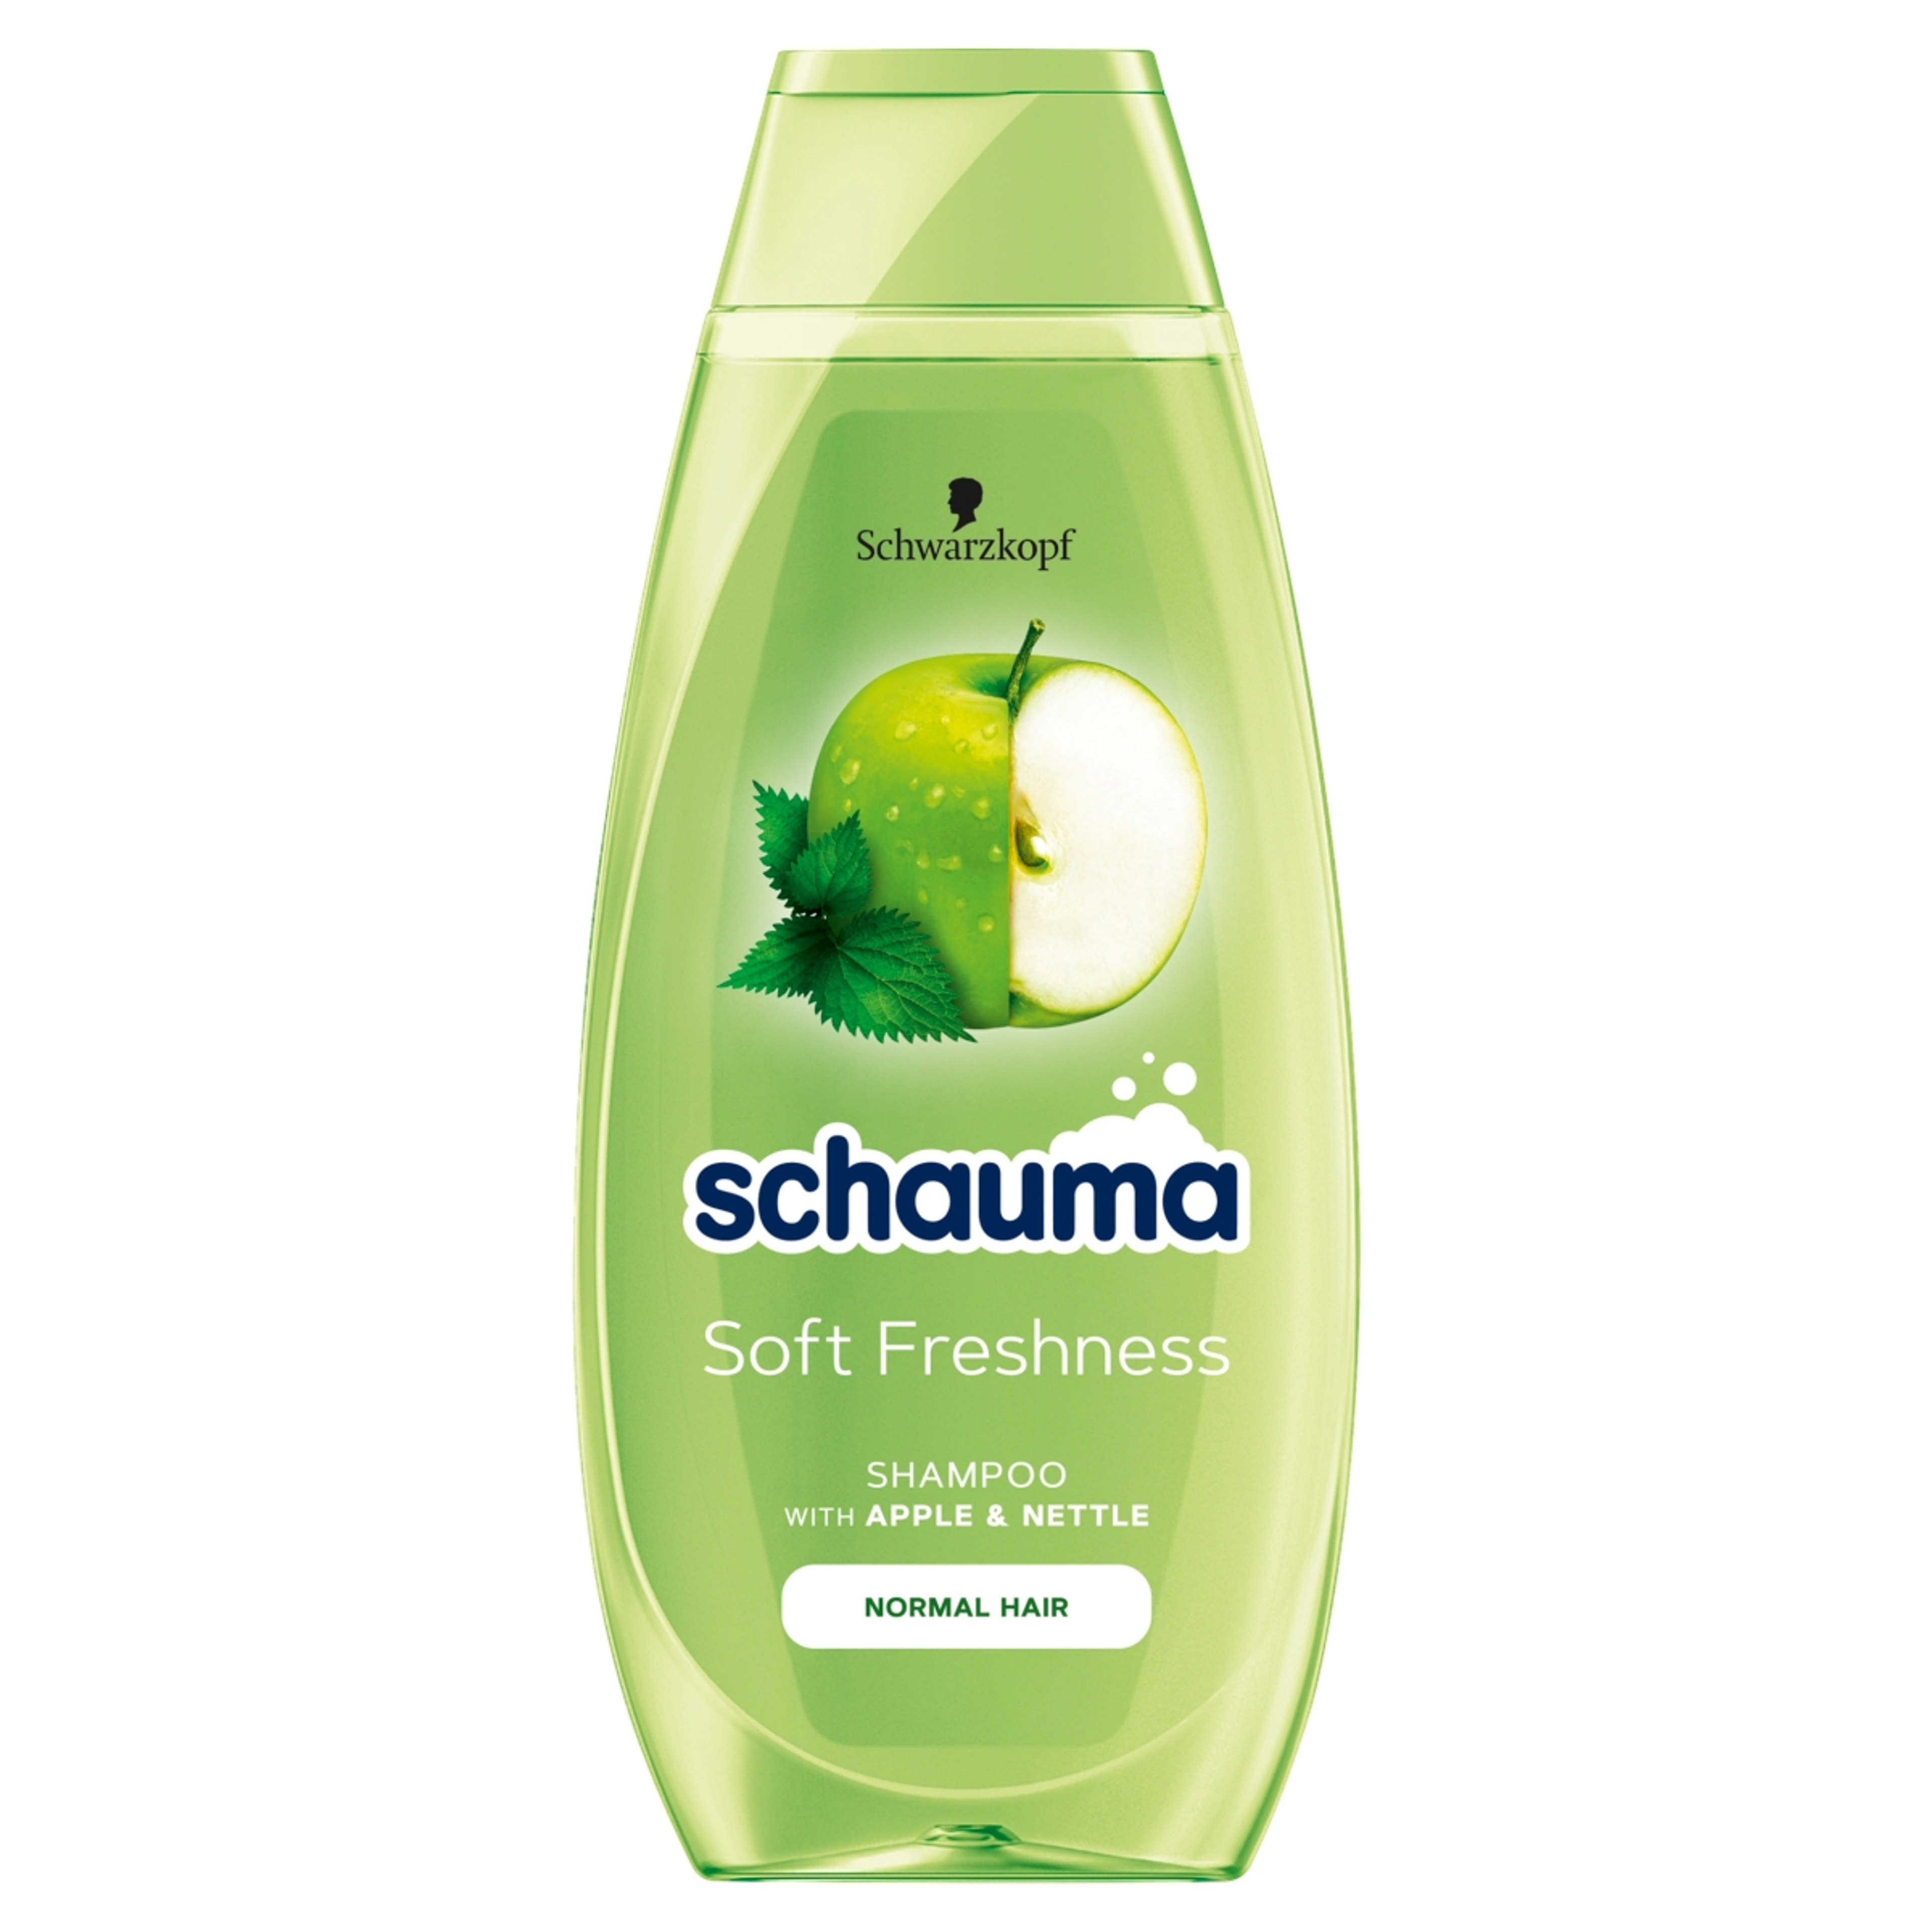 Schauma sampon Clean & Fresh zöld almával és csalánnal - 400 ml-1